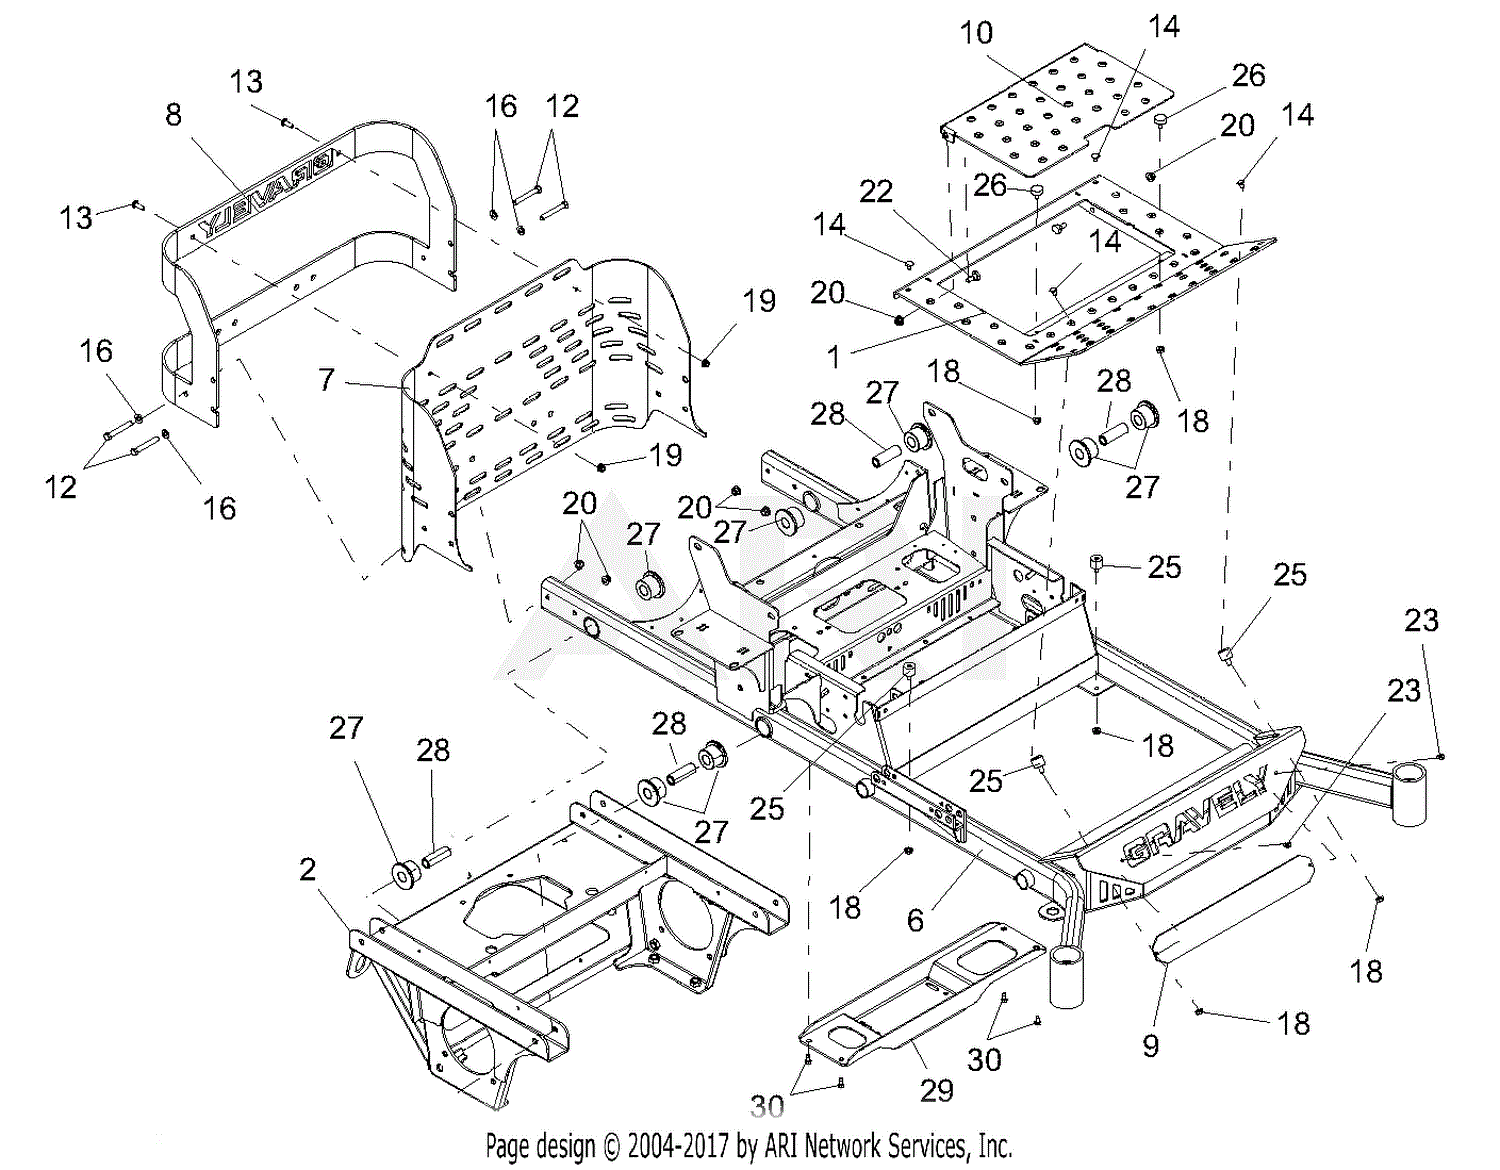 F620 Wiring Diagram. electrical diagram for john deere z445 bing images